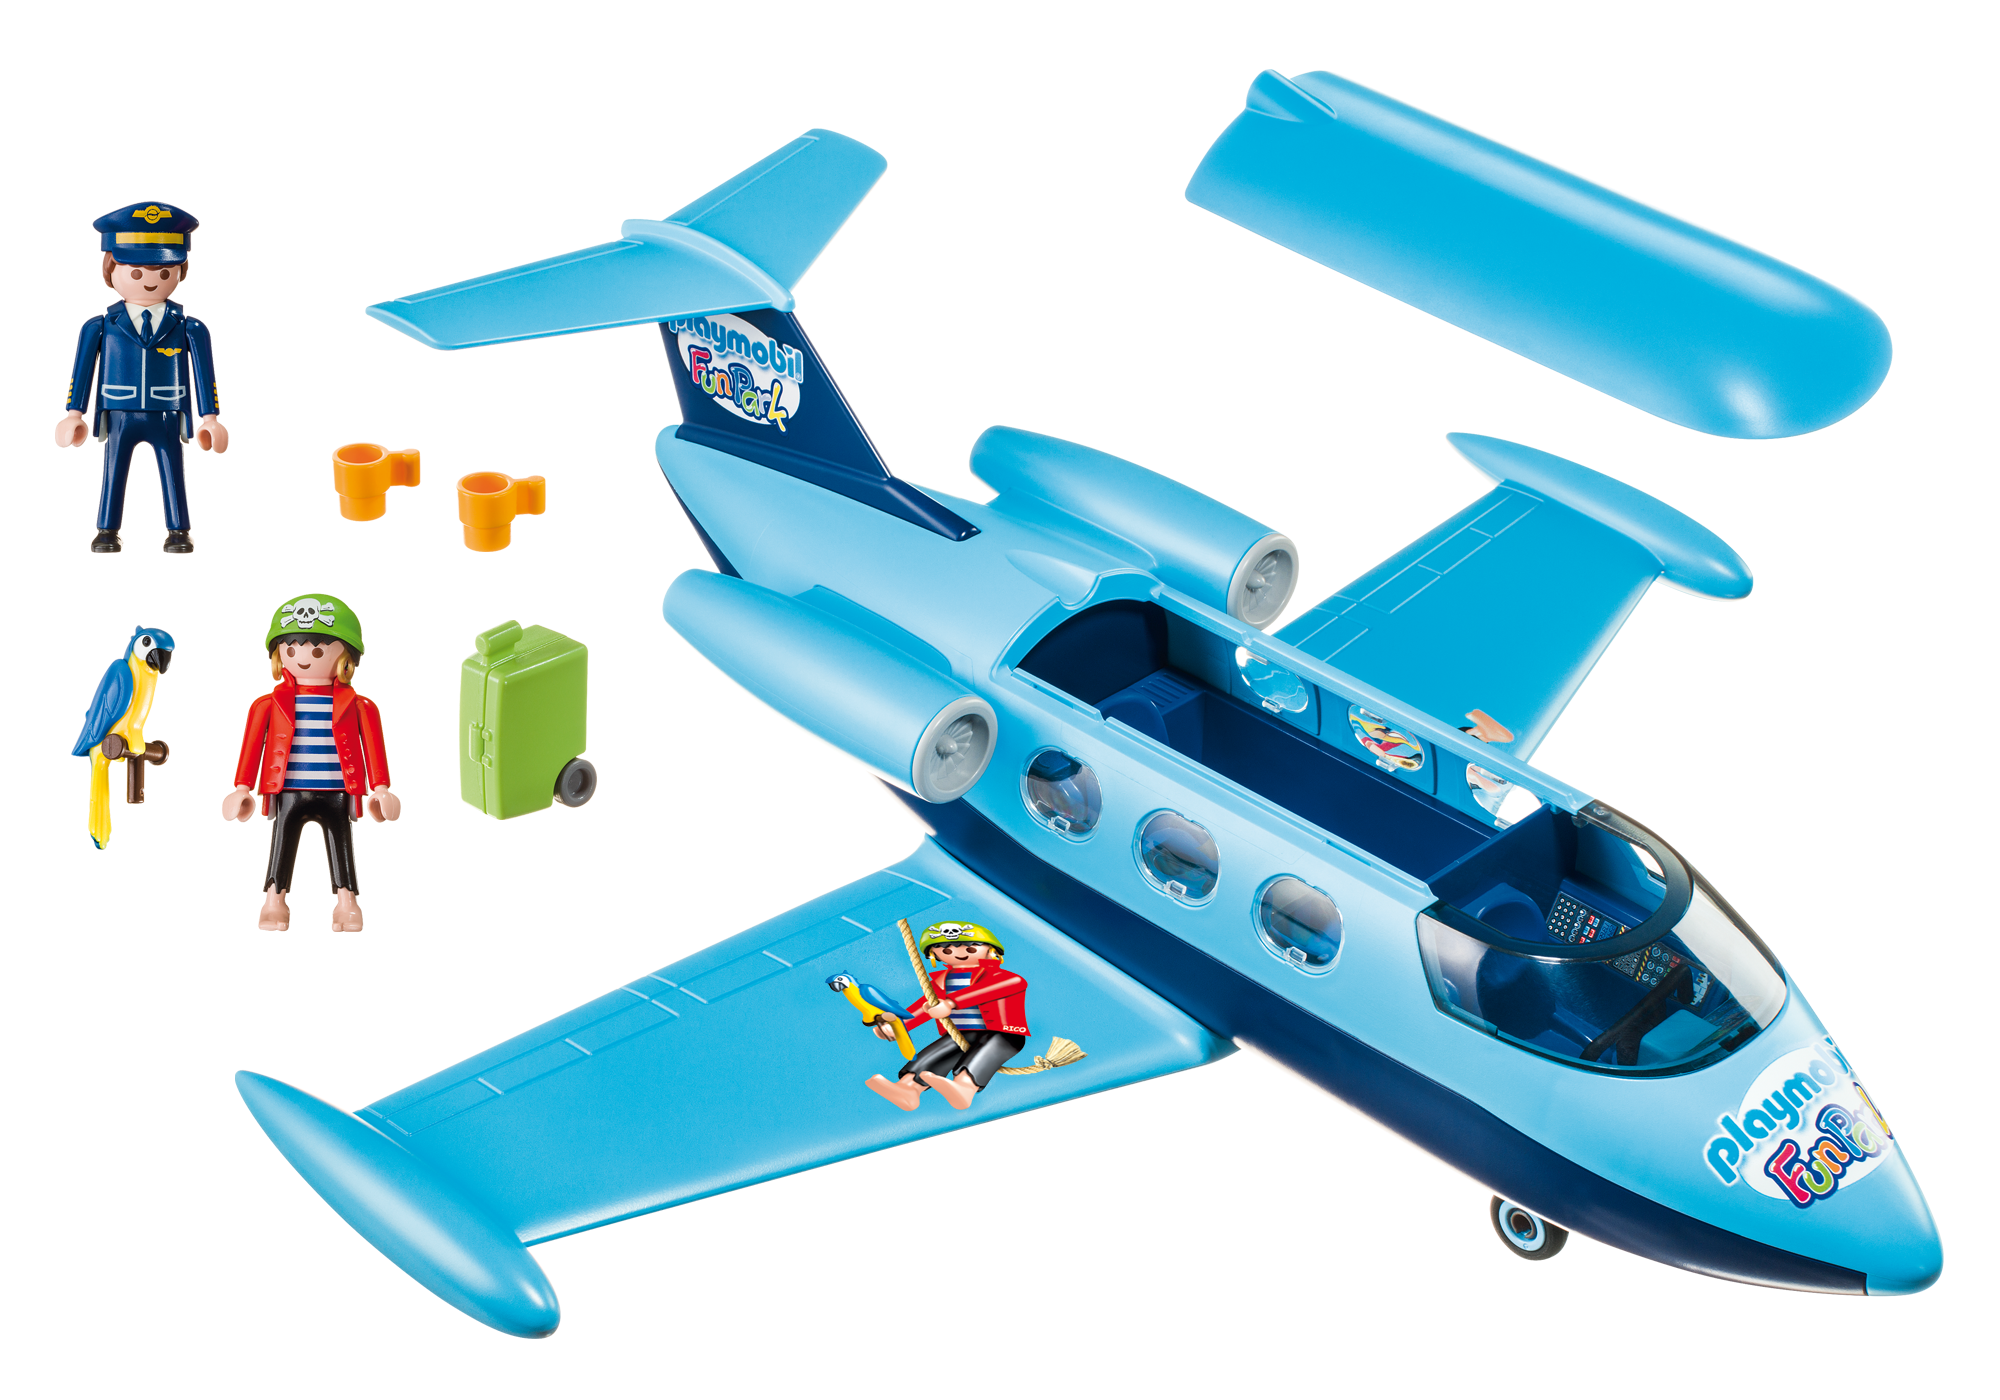 avion polystyrène playmobil